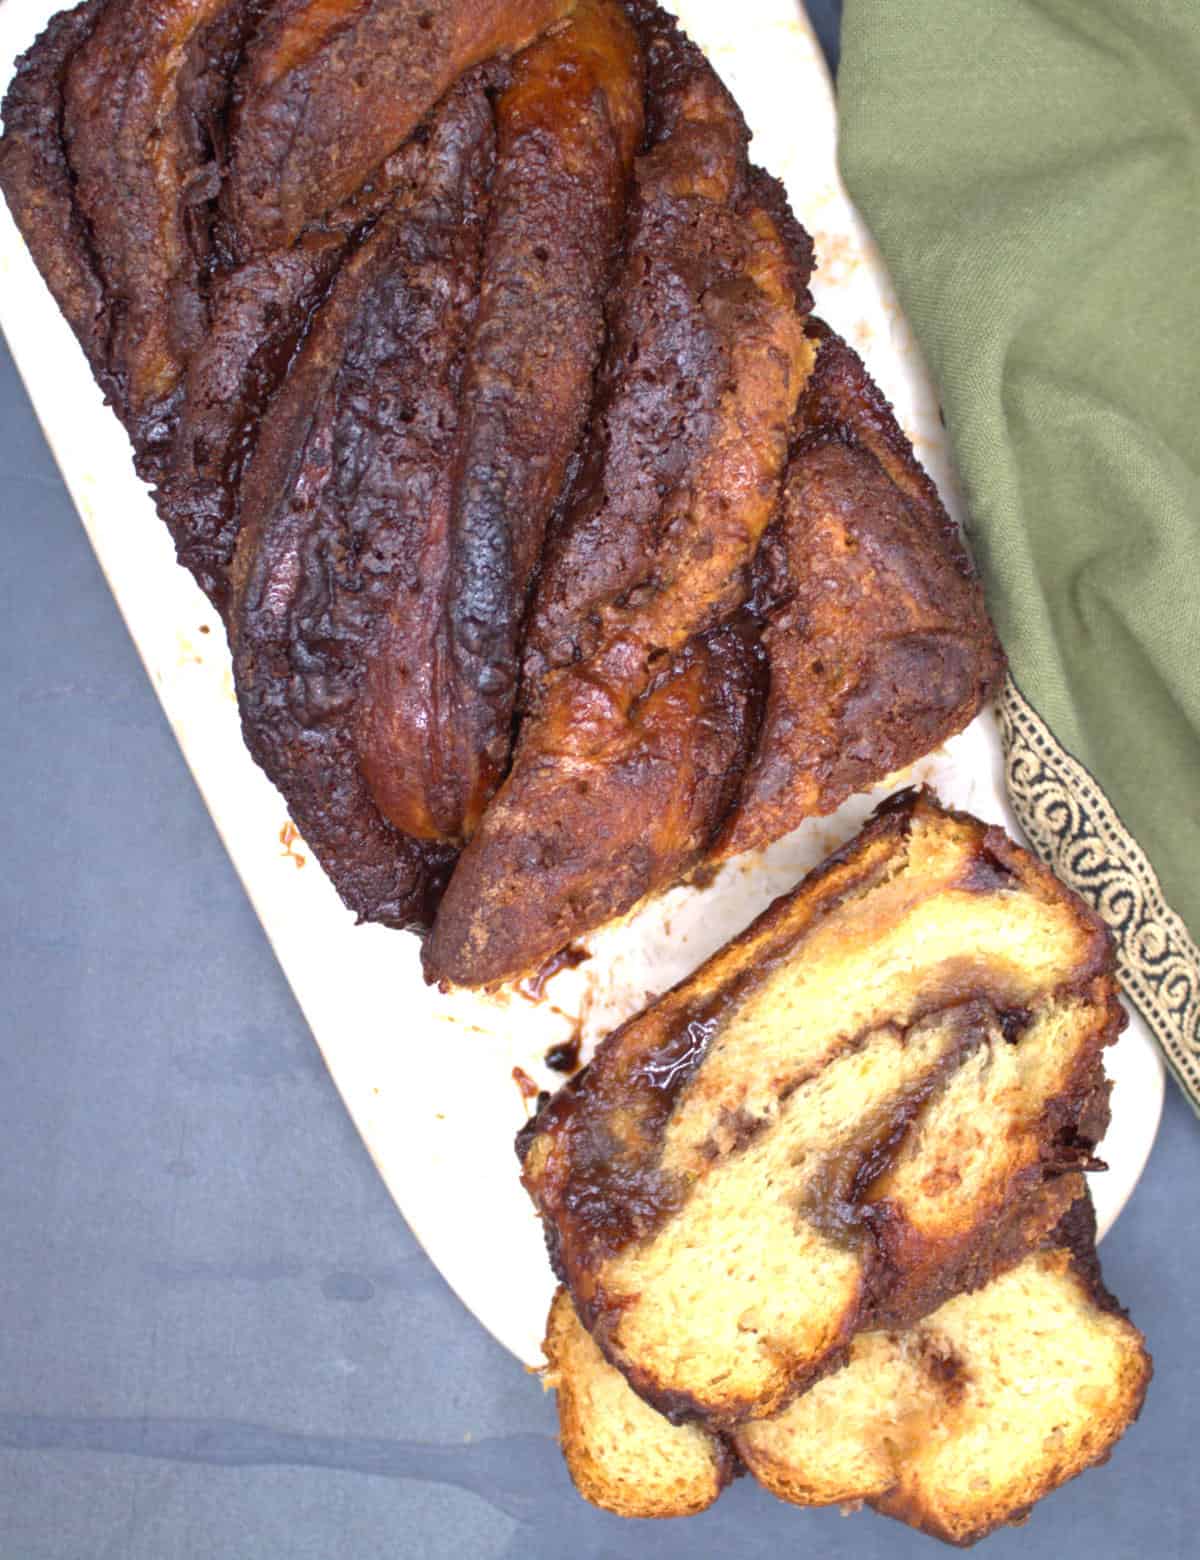 Sliced vegan chocolate babka loaf on marble board.